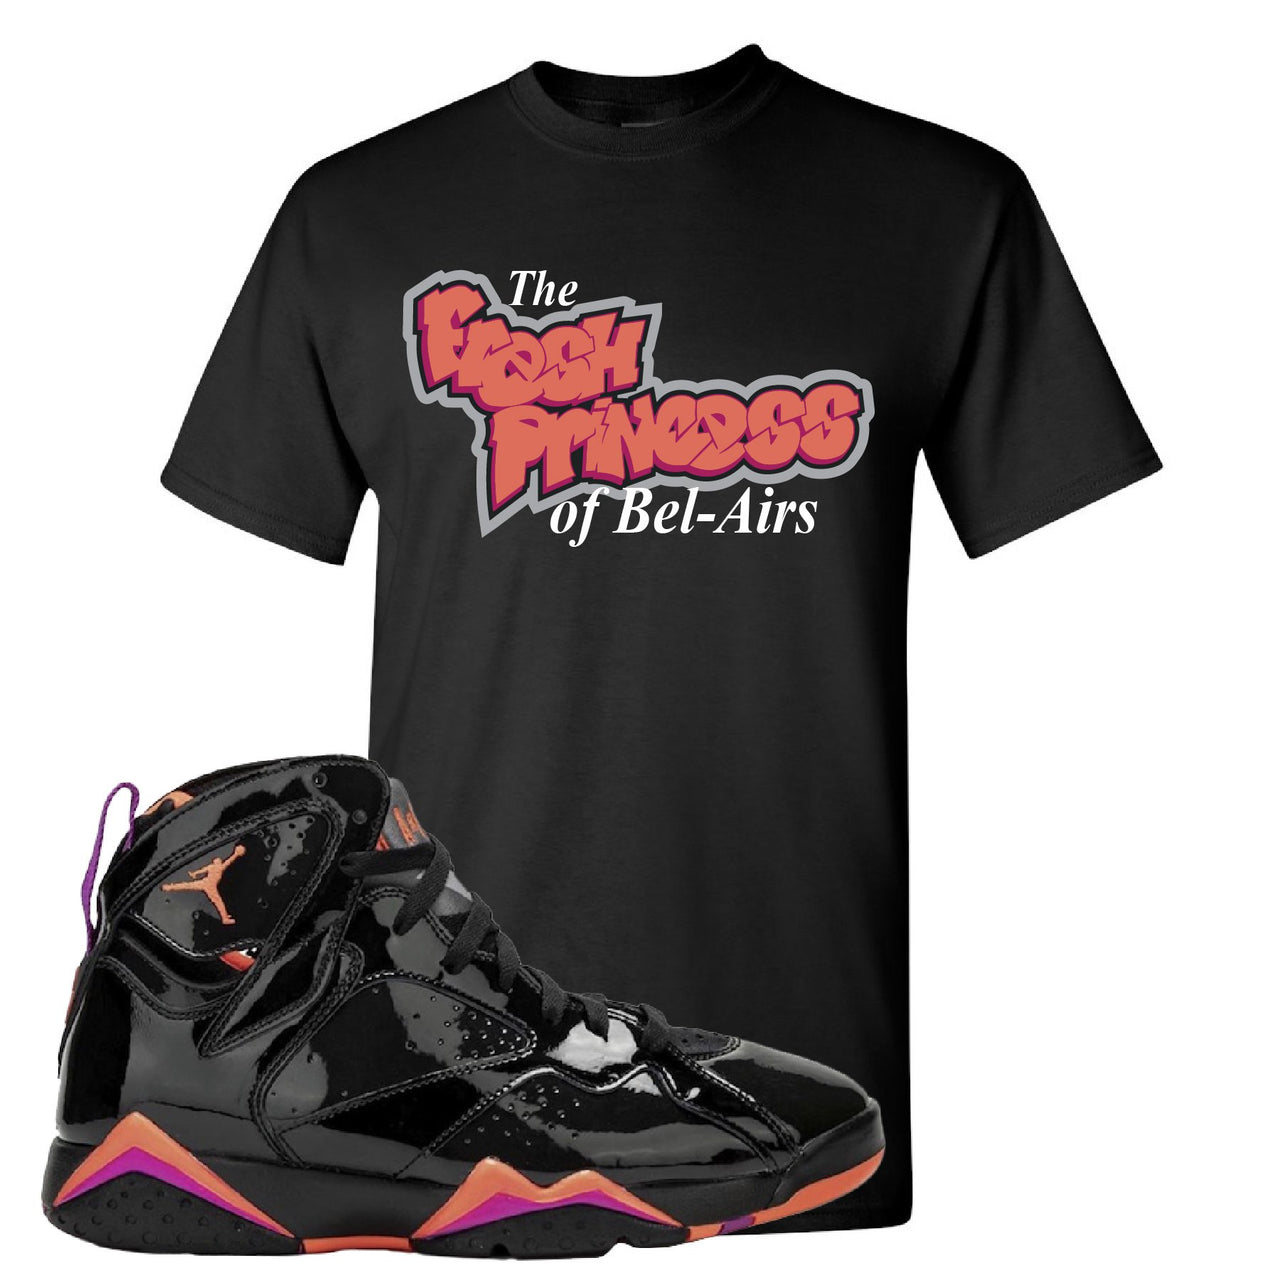 Jordan 7 WMNS Black Patent Leather The Fresh Princess of Bel Air Black Sneaker Hook Up T-Shirt